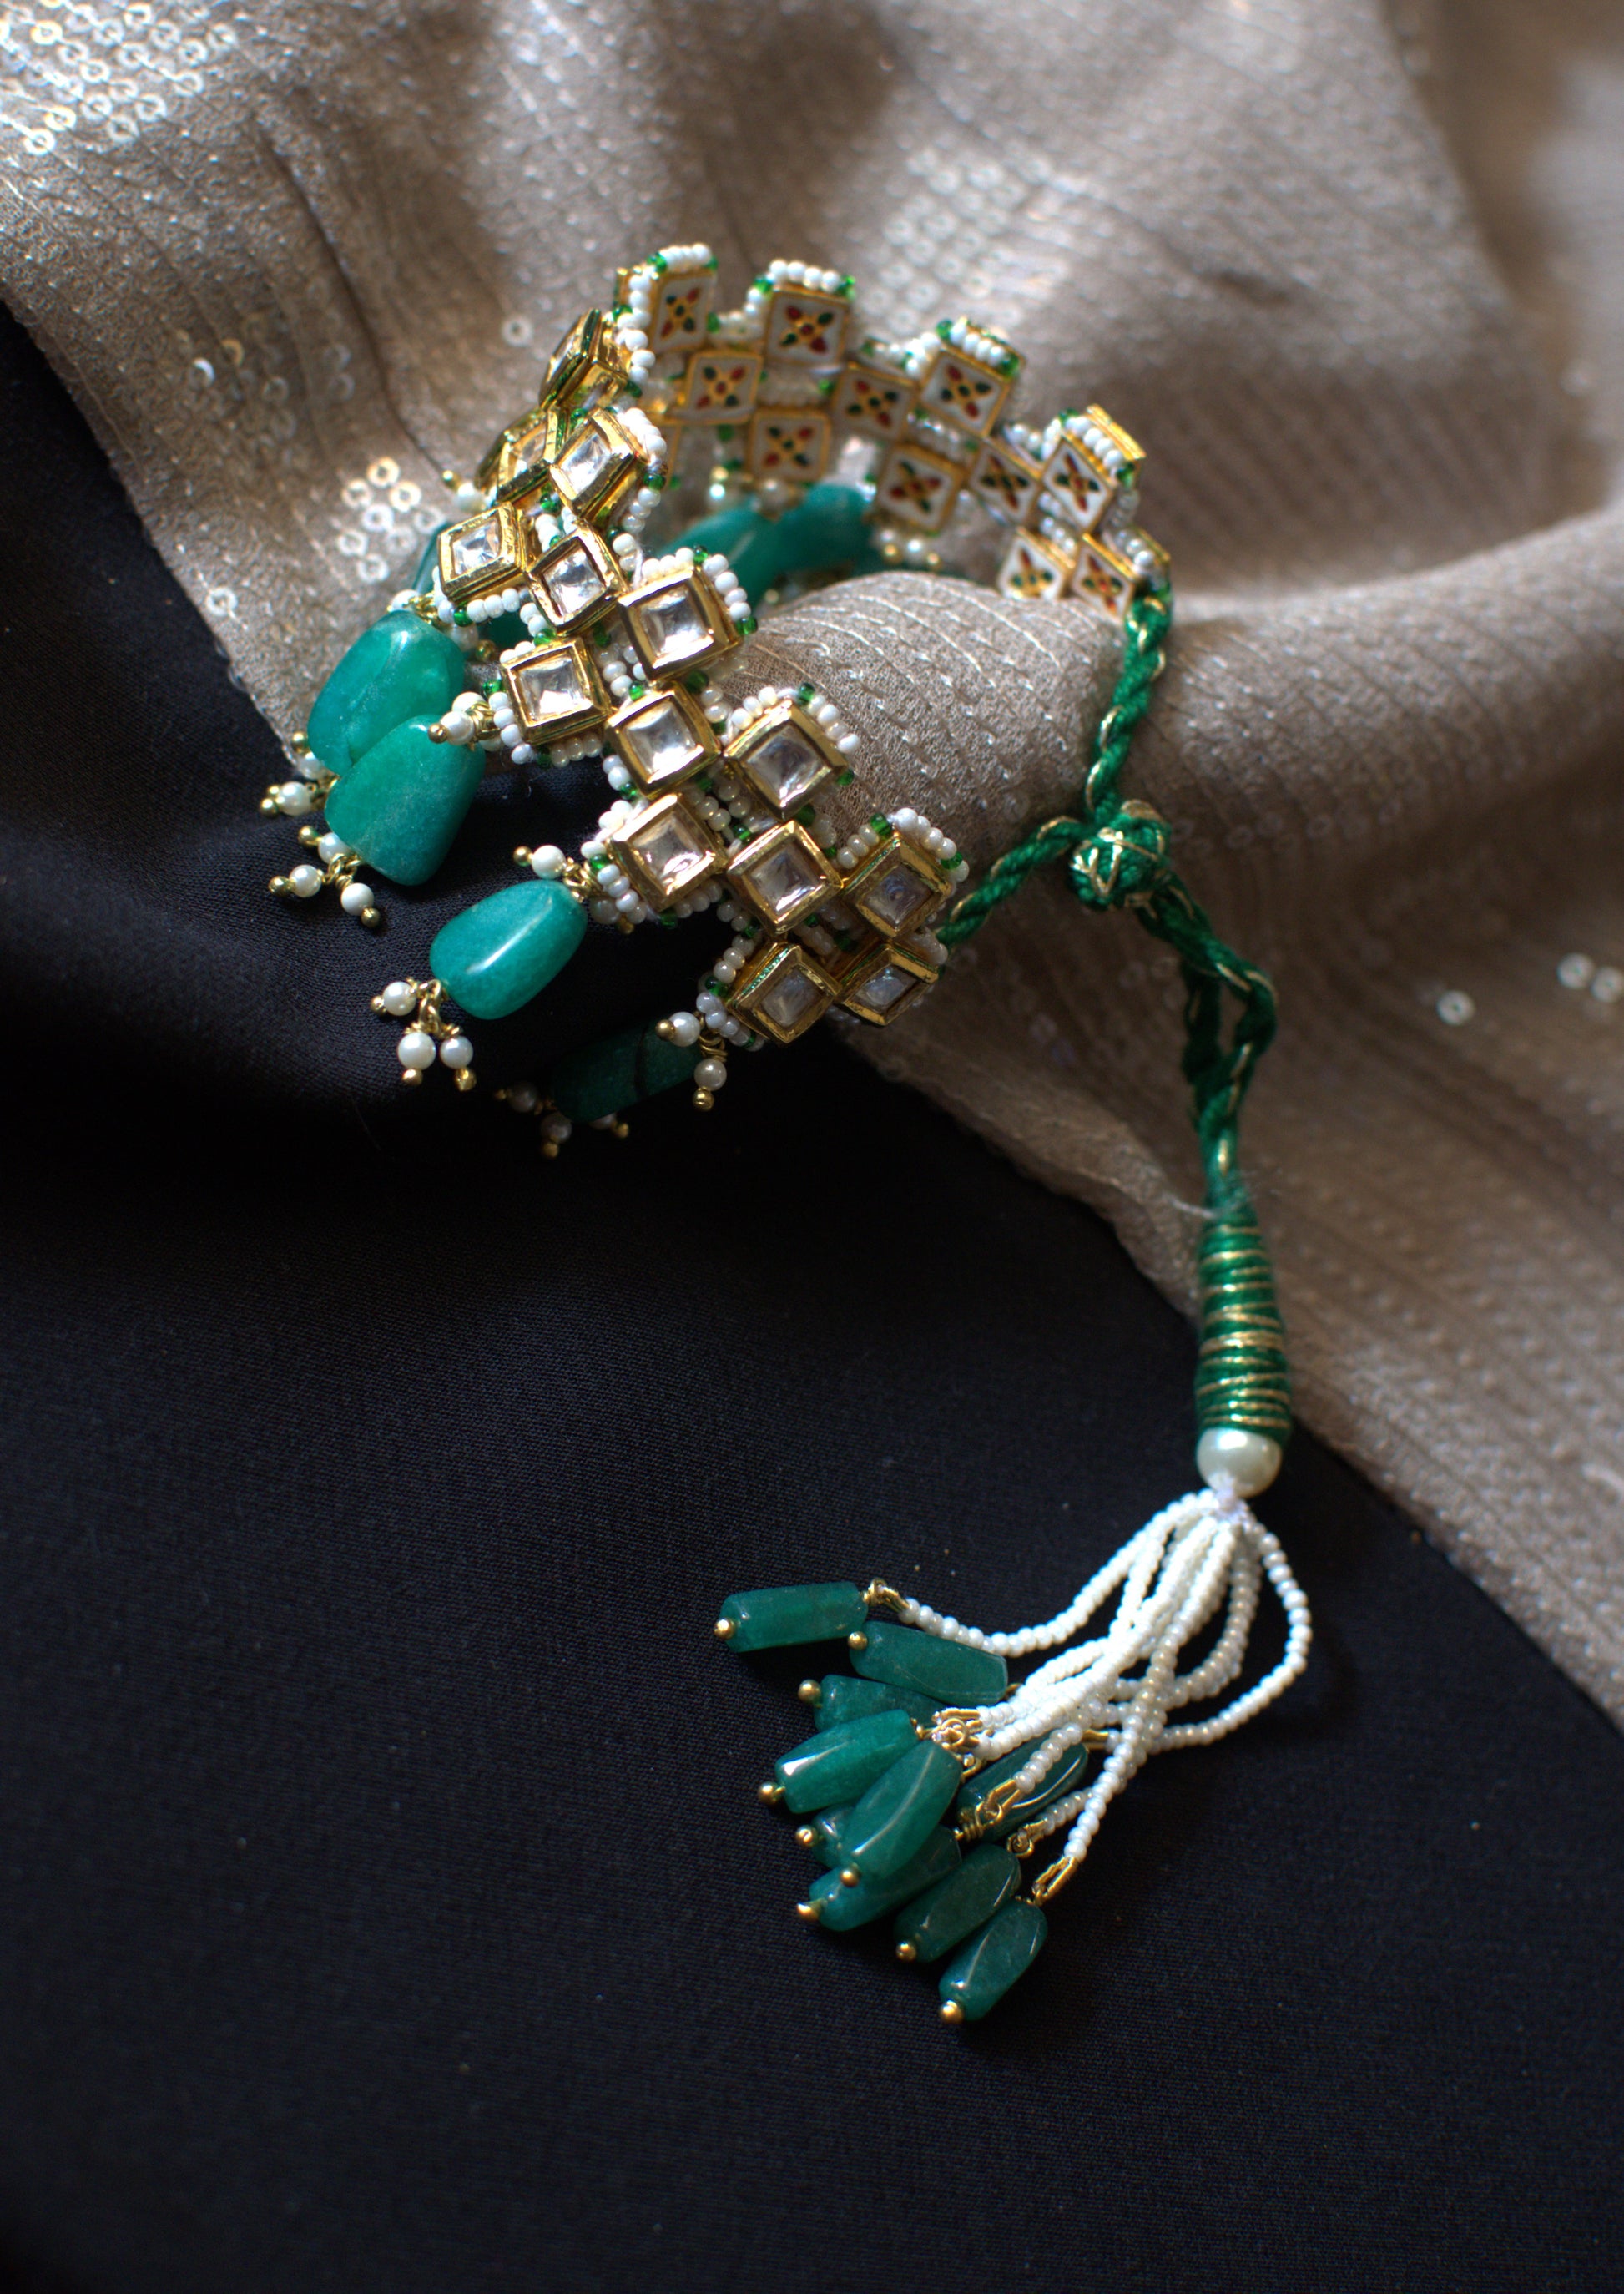 Chauki Haritah Bracelet at Kamakhyaa by House Of Heer. This item is Alloy Metal, Bracelets, Festive Wear, Free Size, Gemstone, jewelry, Multicolor, Natural, Pearl, Polkis, rakhis & lumbas, Textured